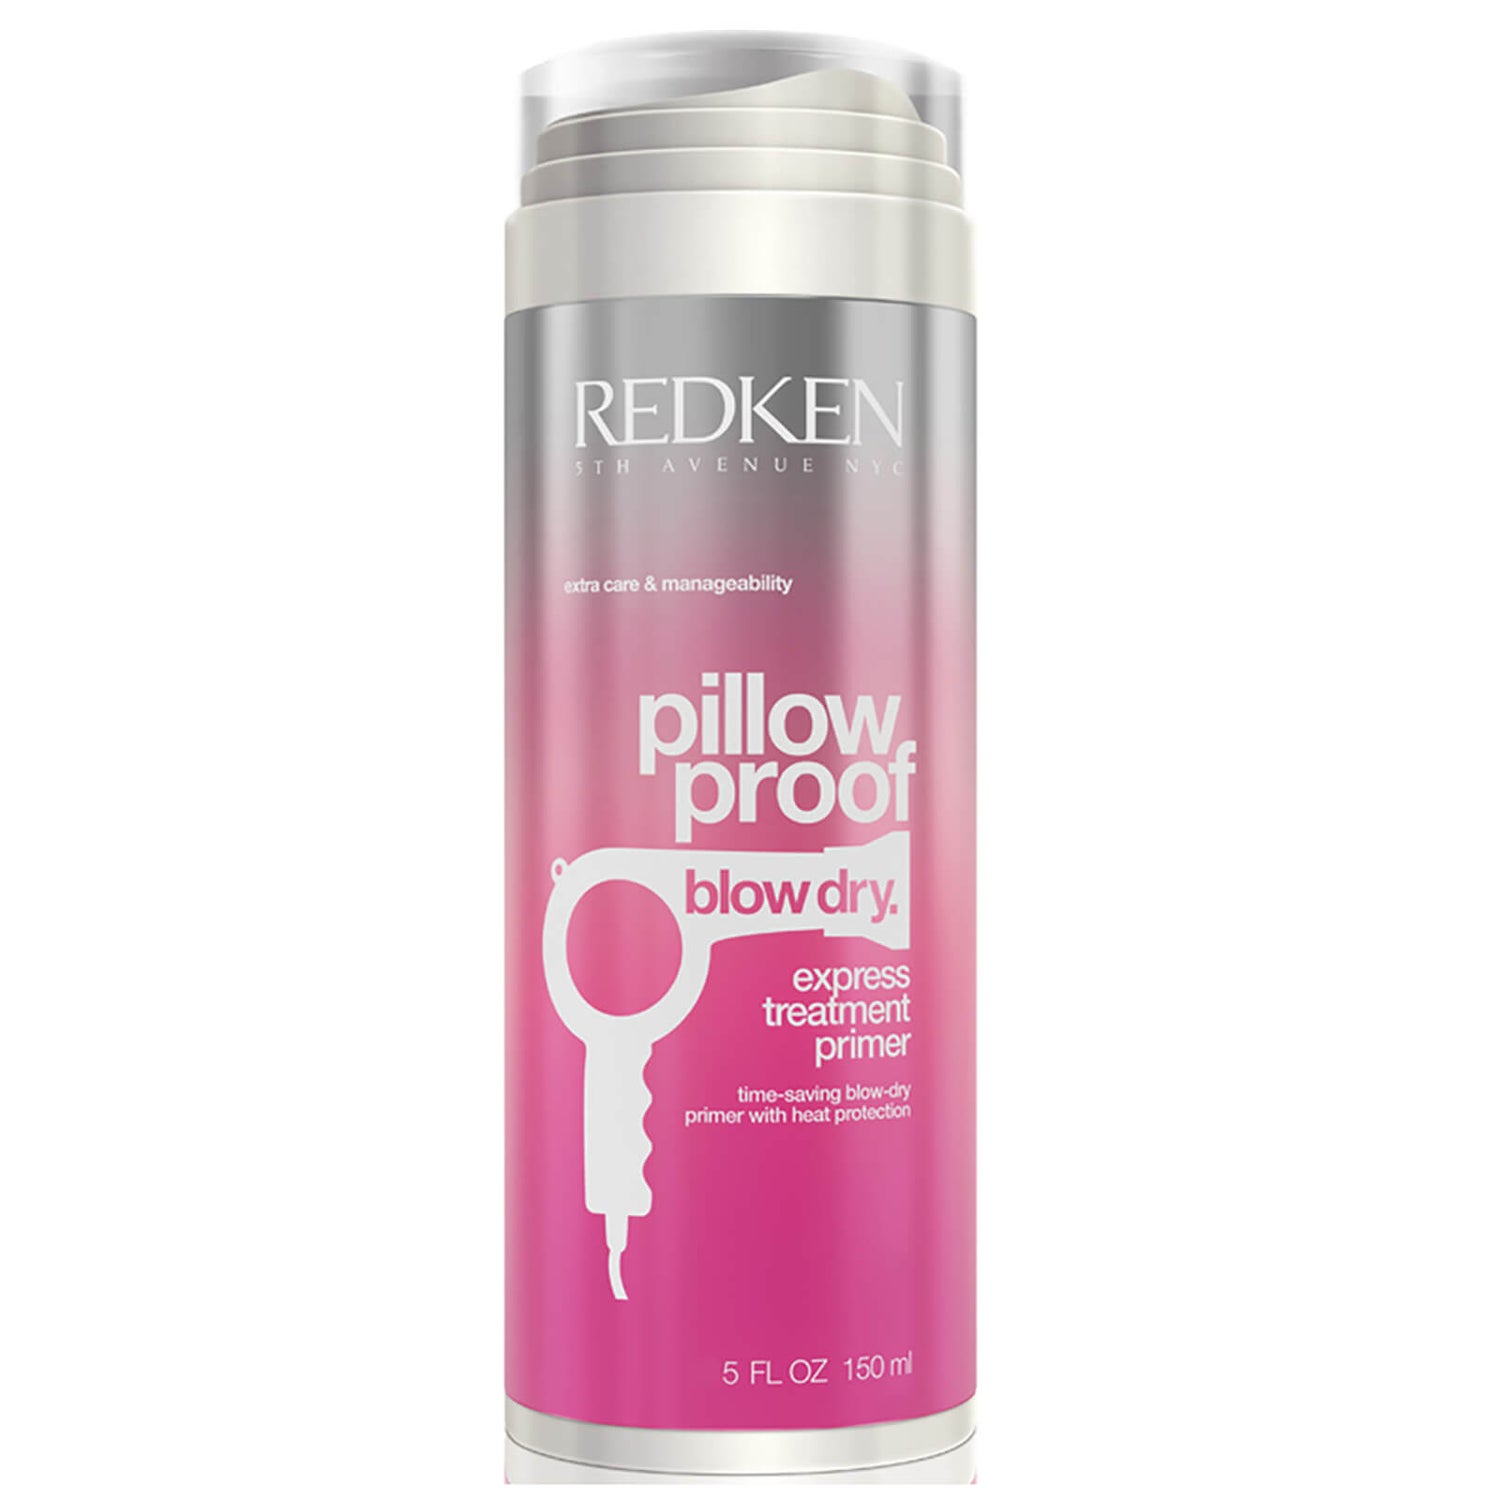 Redken Pillow Proof Blowdry Express trattamento Primer crema (150ml)